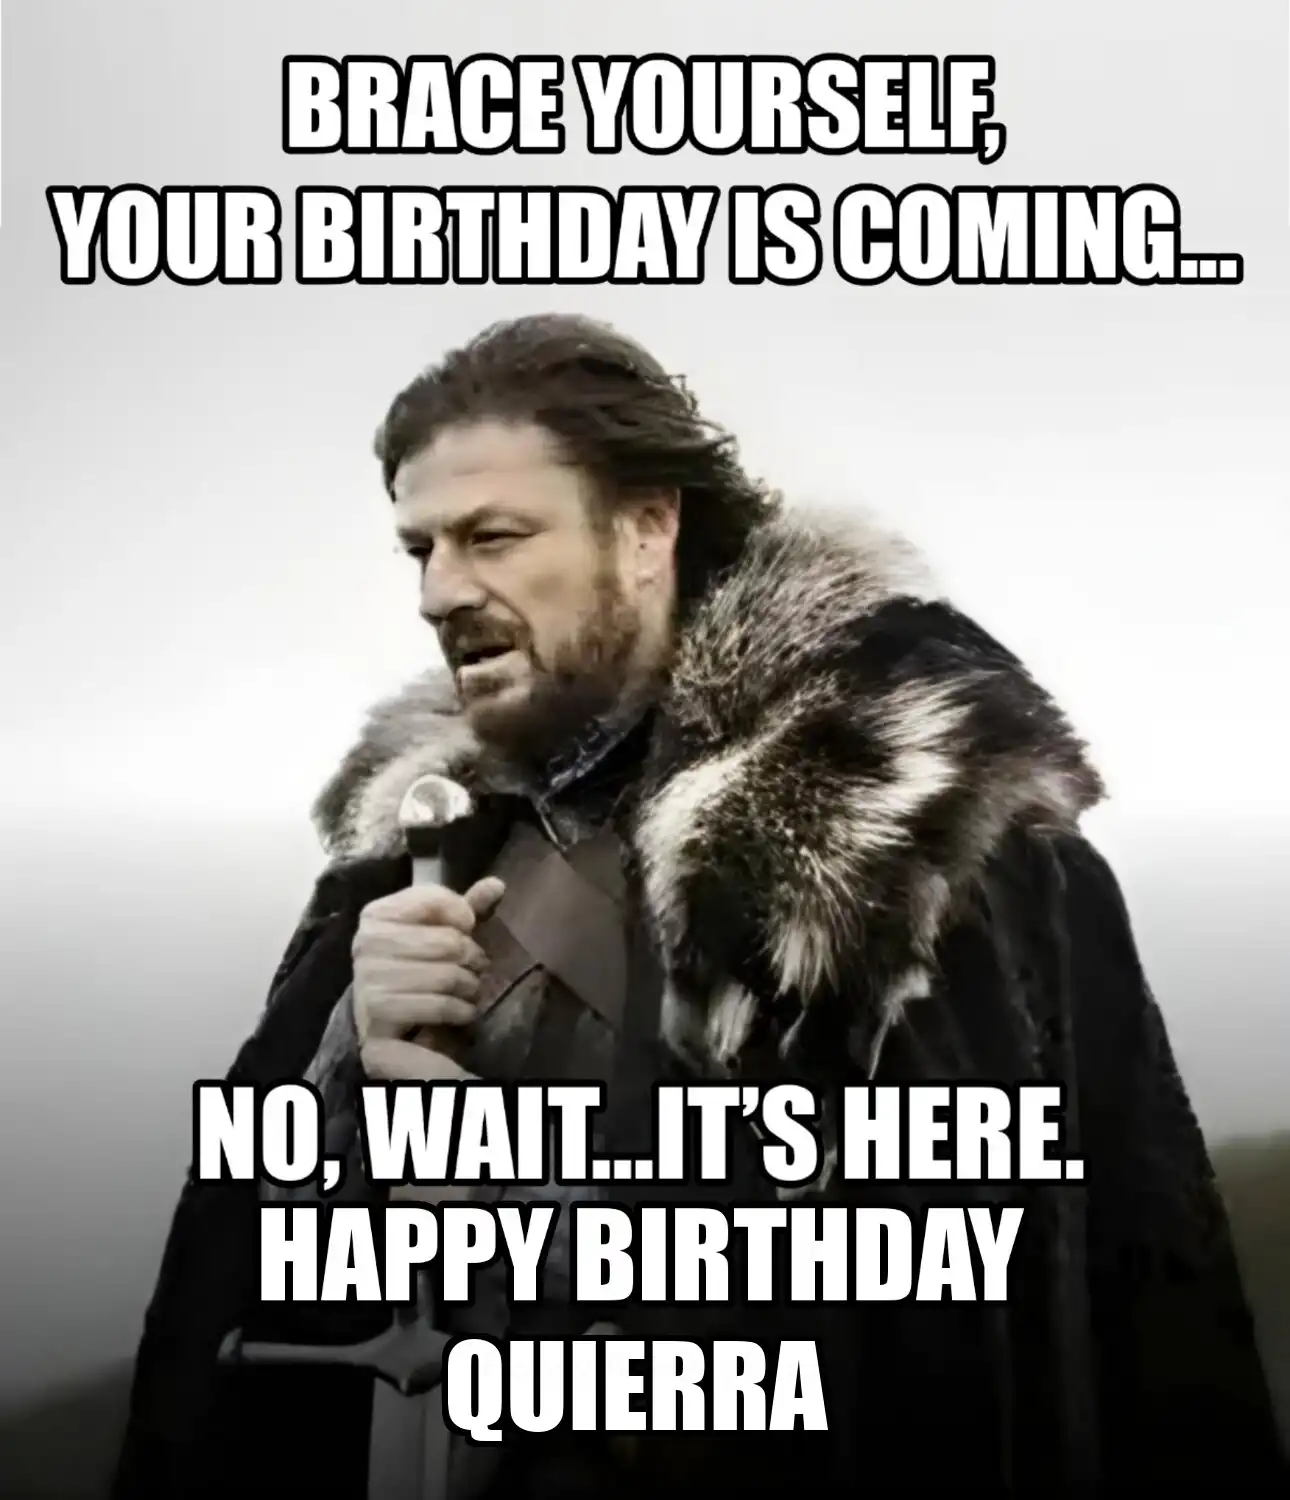 Happy Birthday Quierra Brace Yourself Your Birthday Is Coming Meme